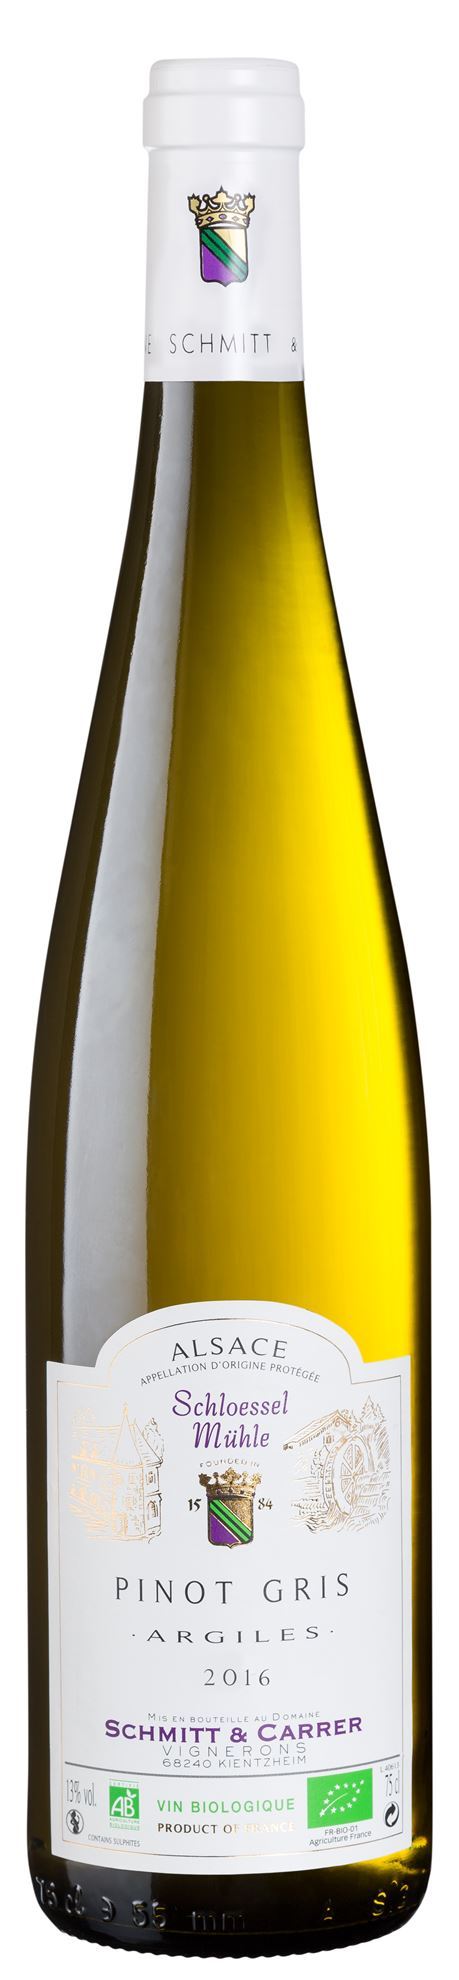 PINOT GRIS "Argiles" Premier Vin d'Alsace 2016 Schmitt & Carrer BIO